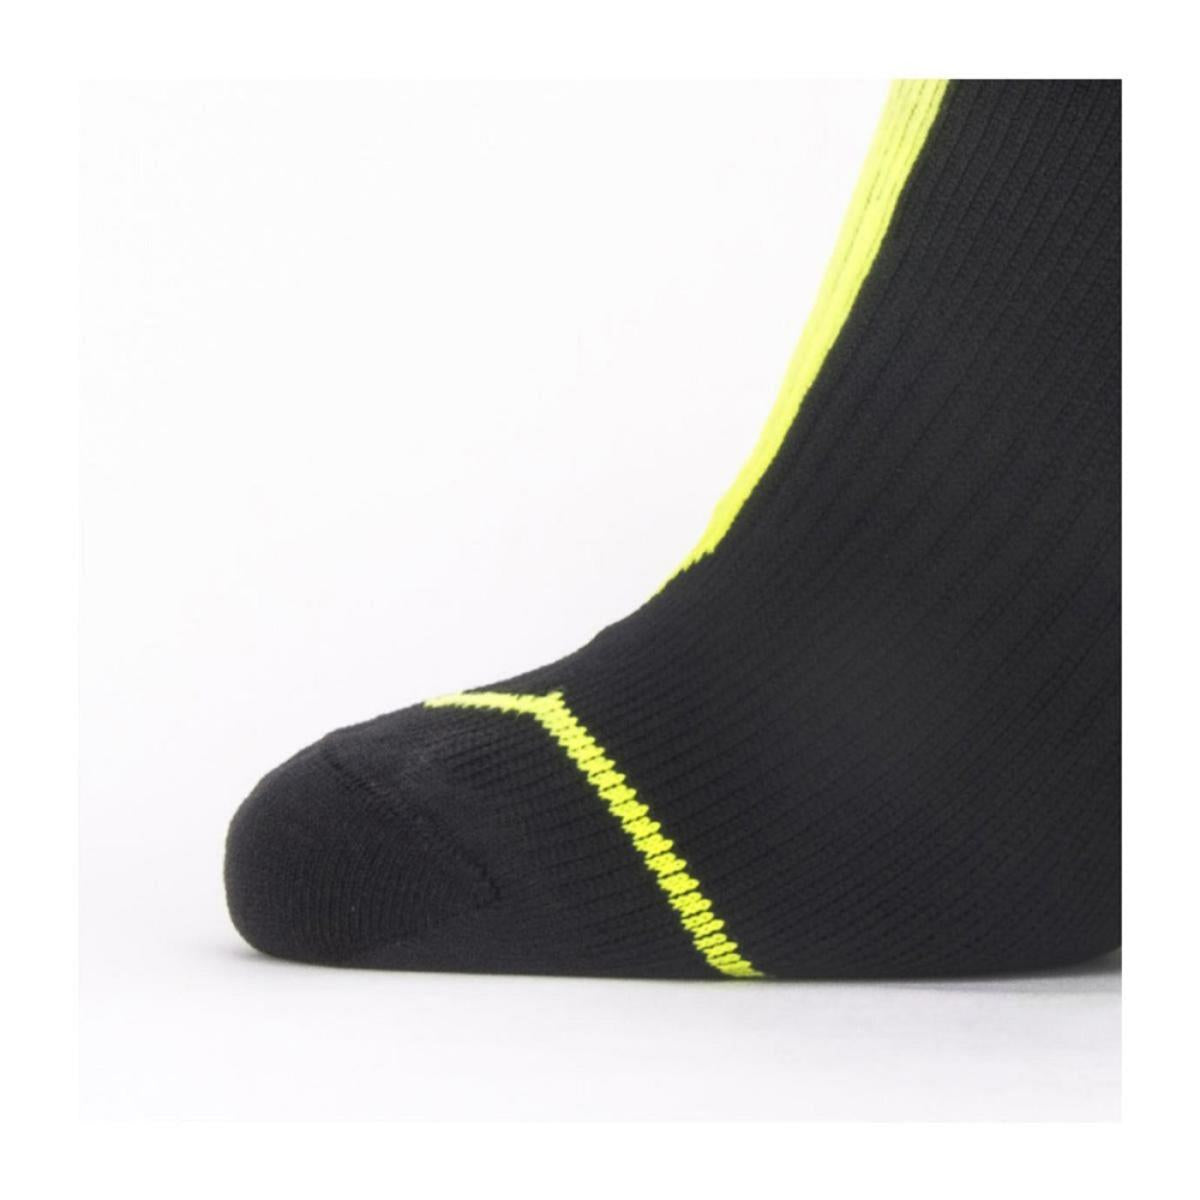 Sealskinz Men's Waterproof All Weather Ankle Length Socks with Hydrostop